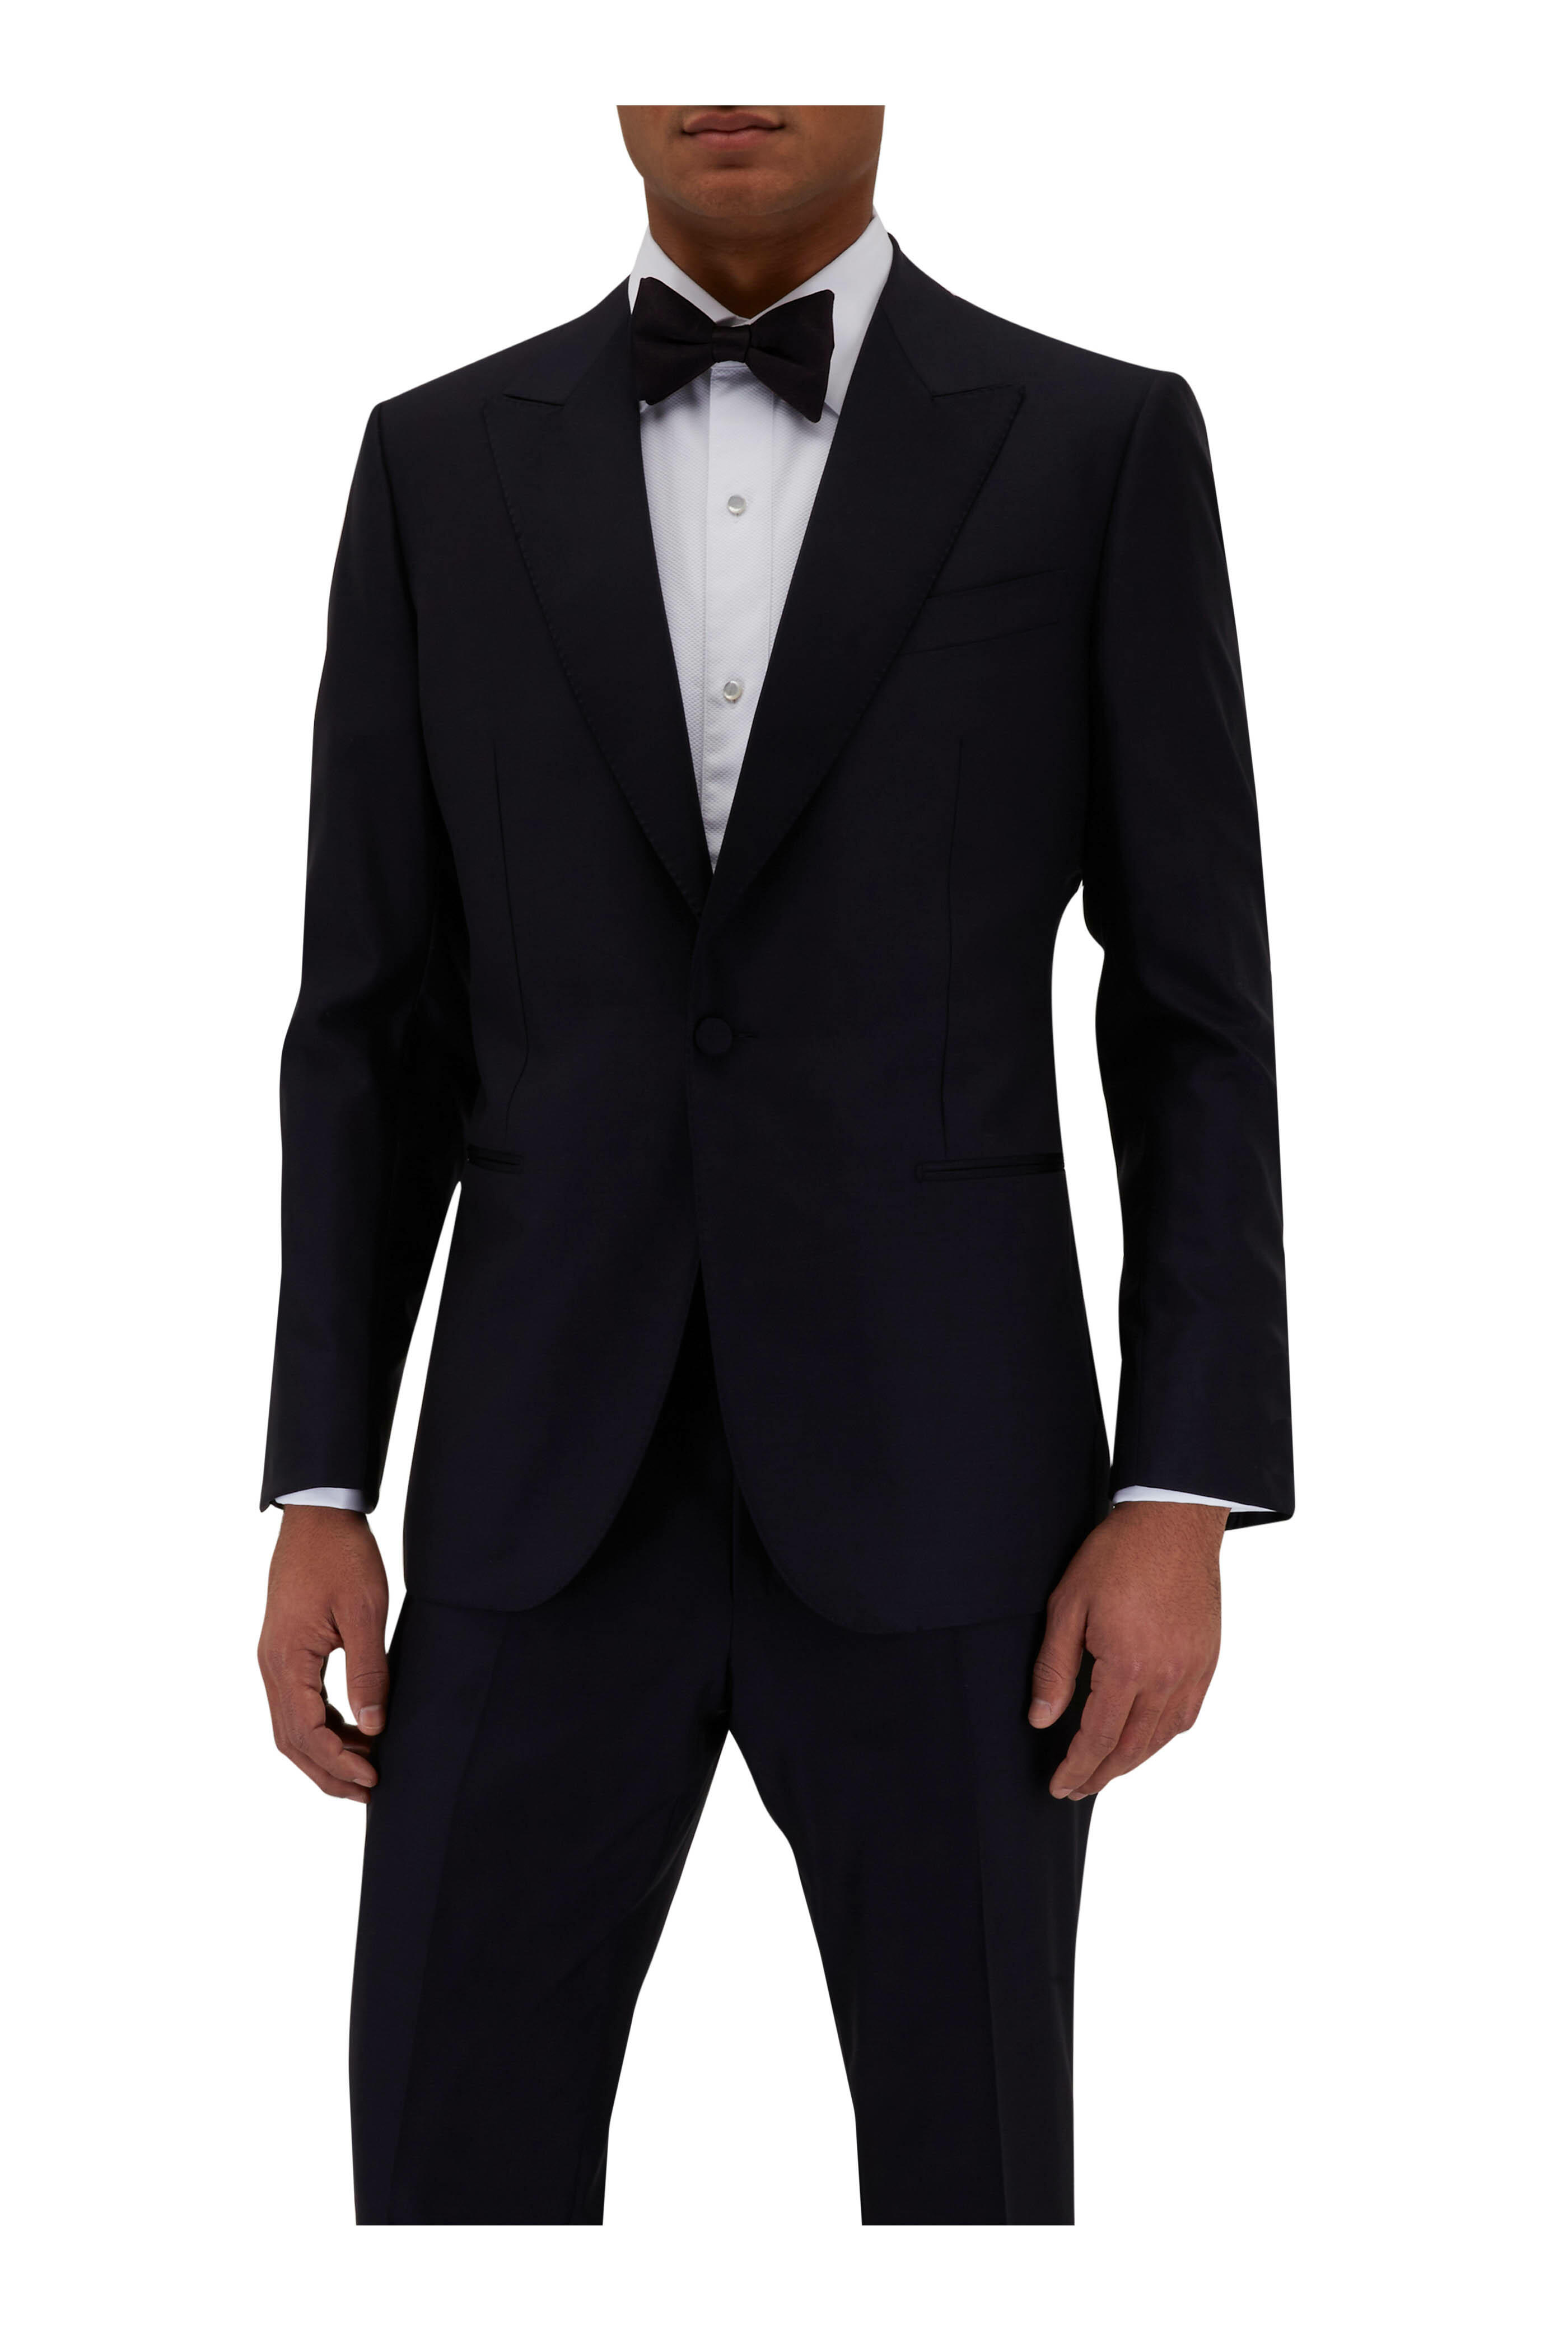 Zegna - Solid Black Trofeo™ 600 Evening Tuxedo | Mitchell Stores